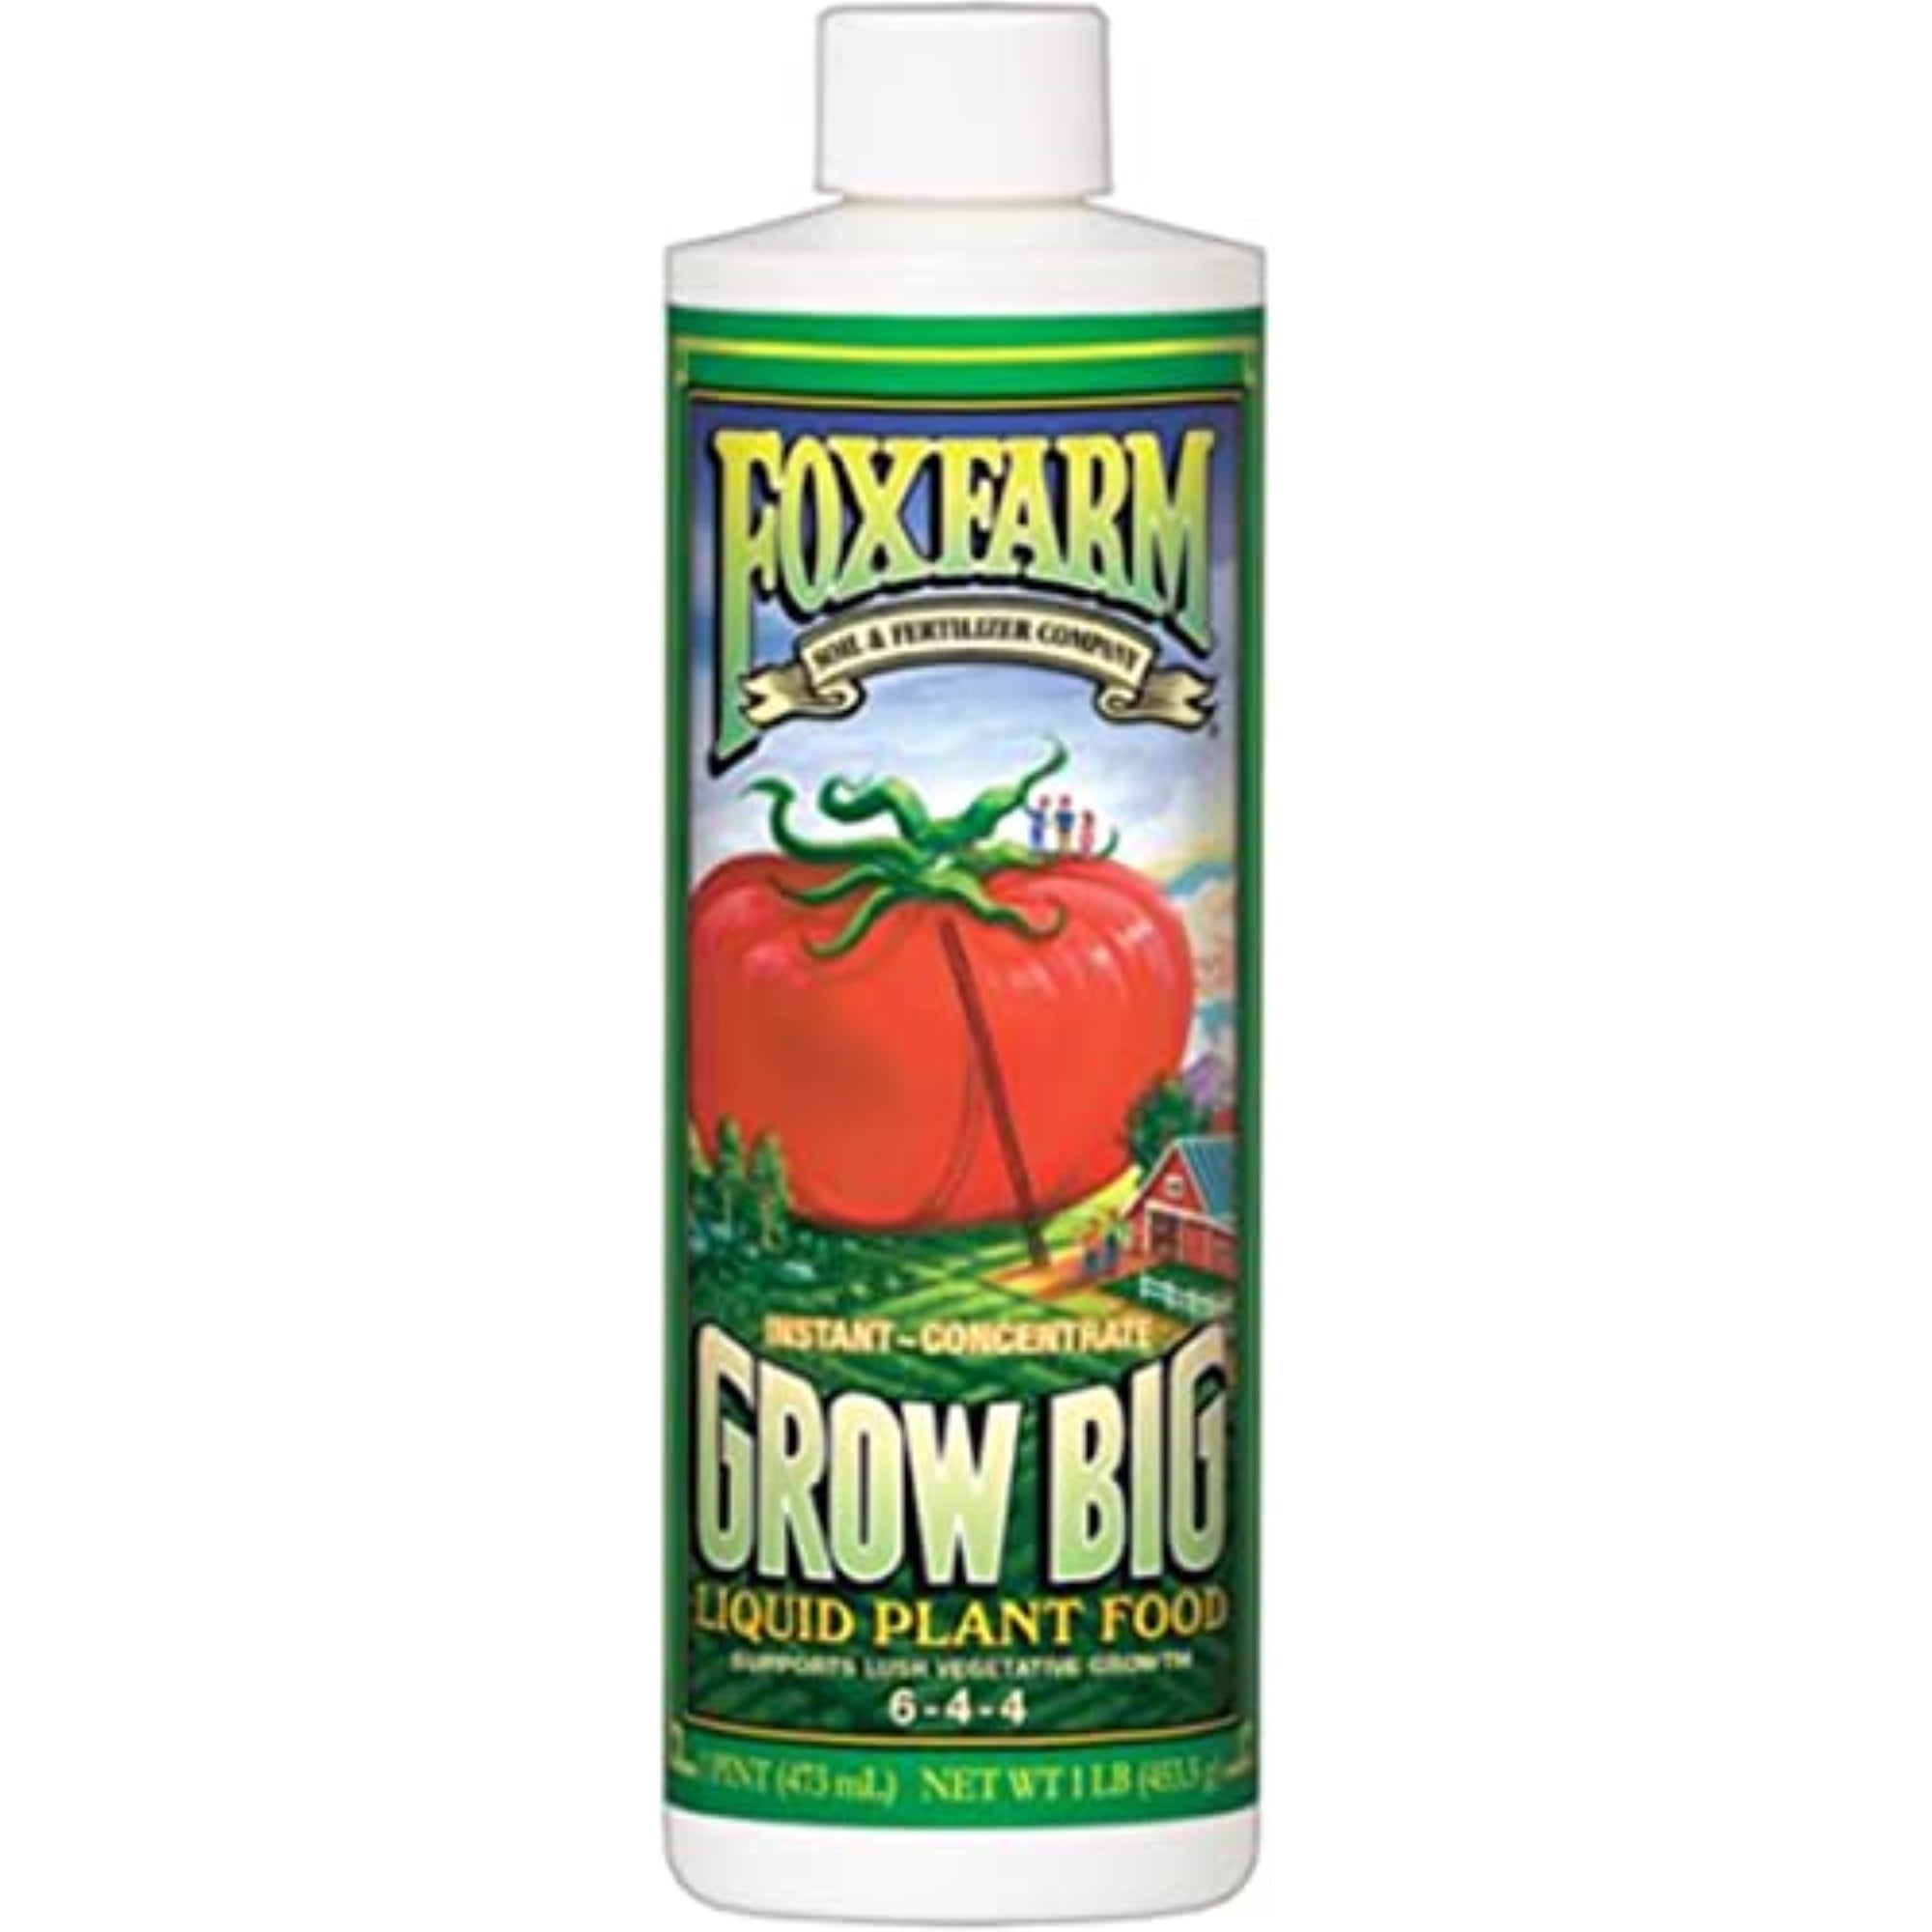 FoxFarm Grow Big Liquid Plant Food 6-4-4, Concentrate - 1 pint